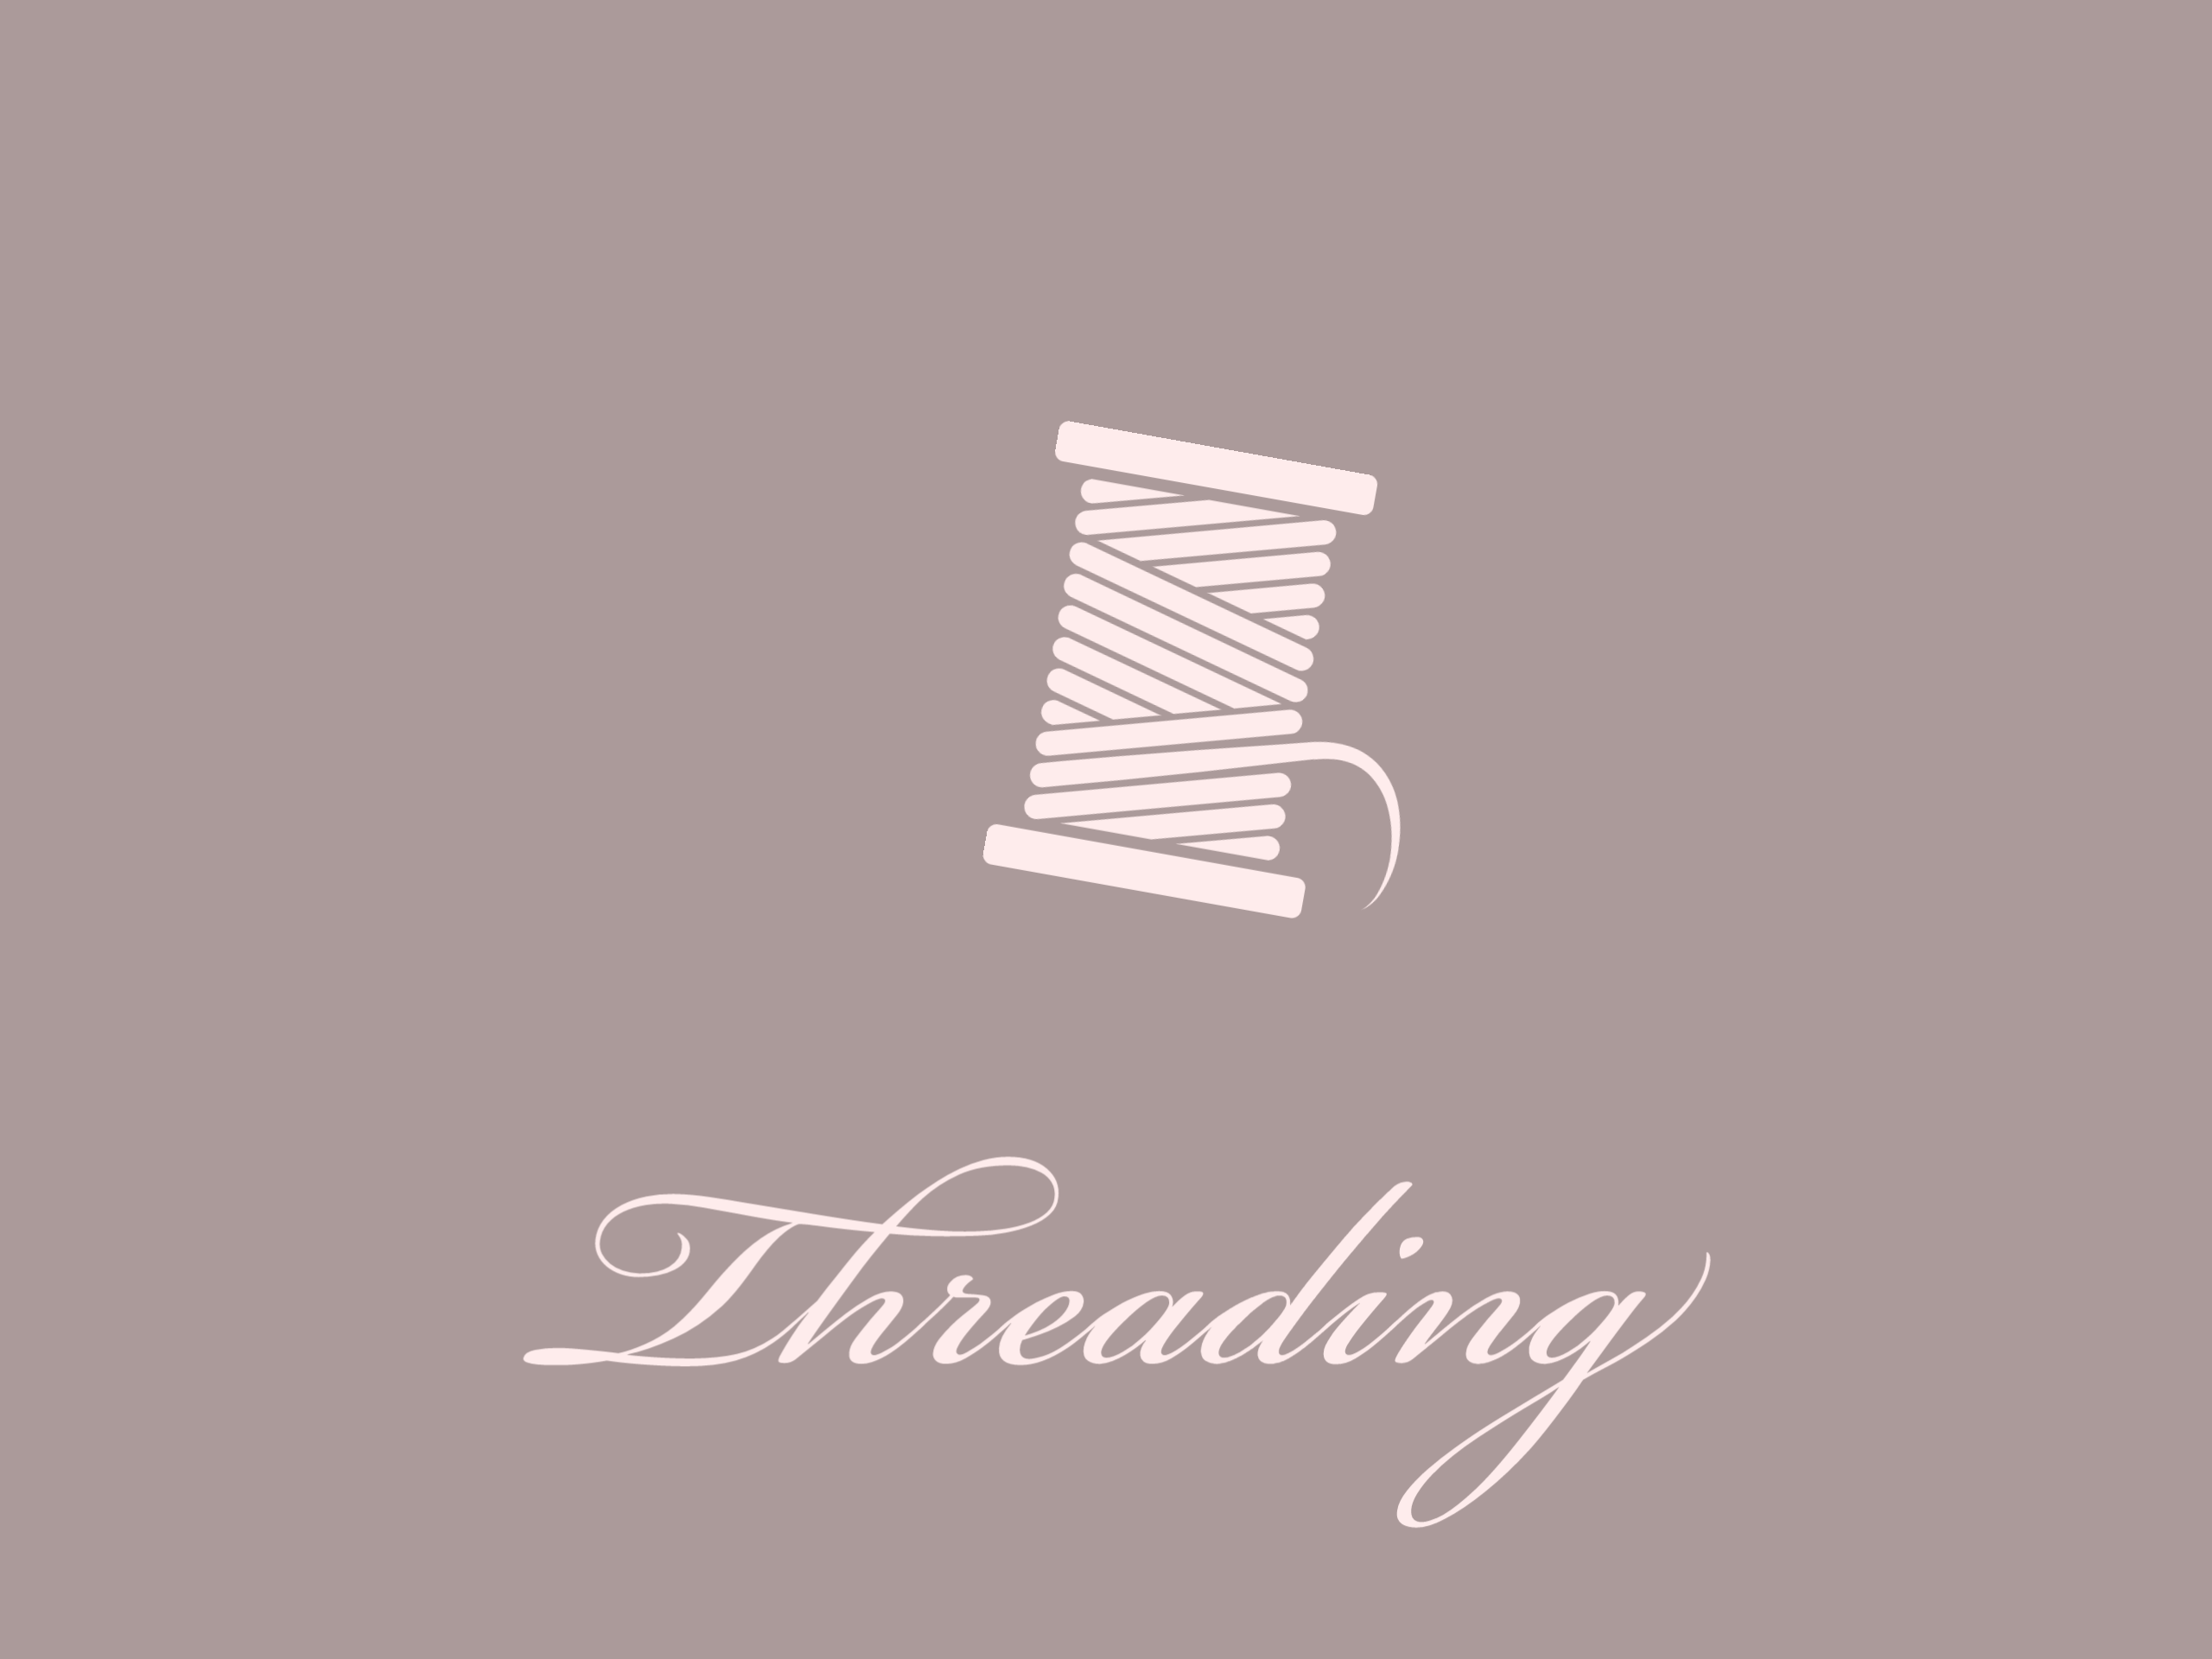 559-threading-website-1.jpg